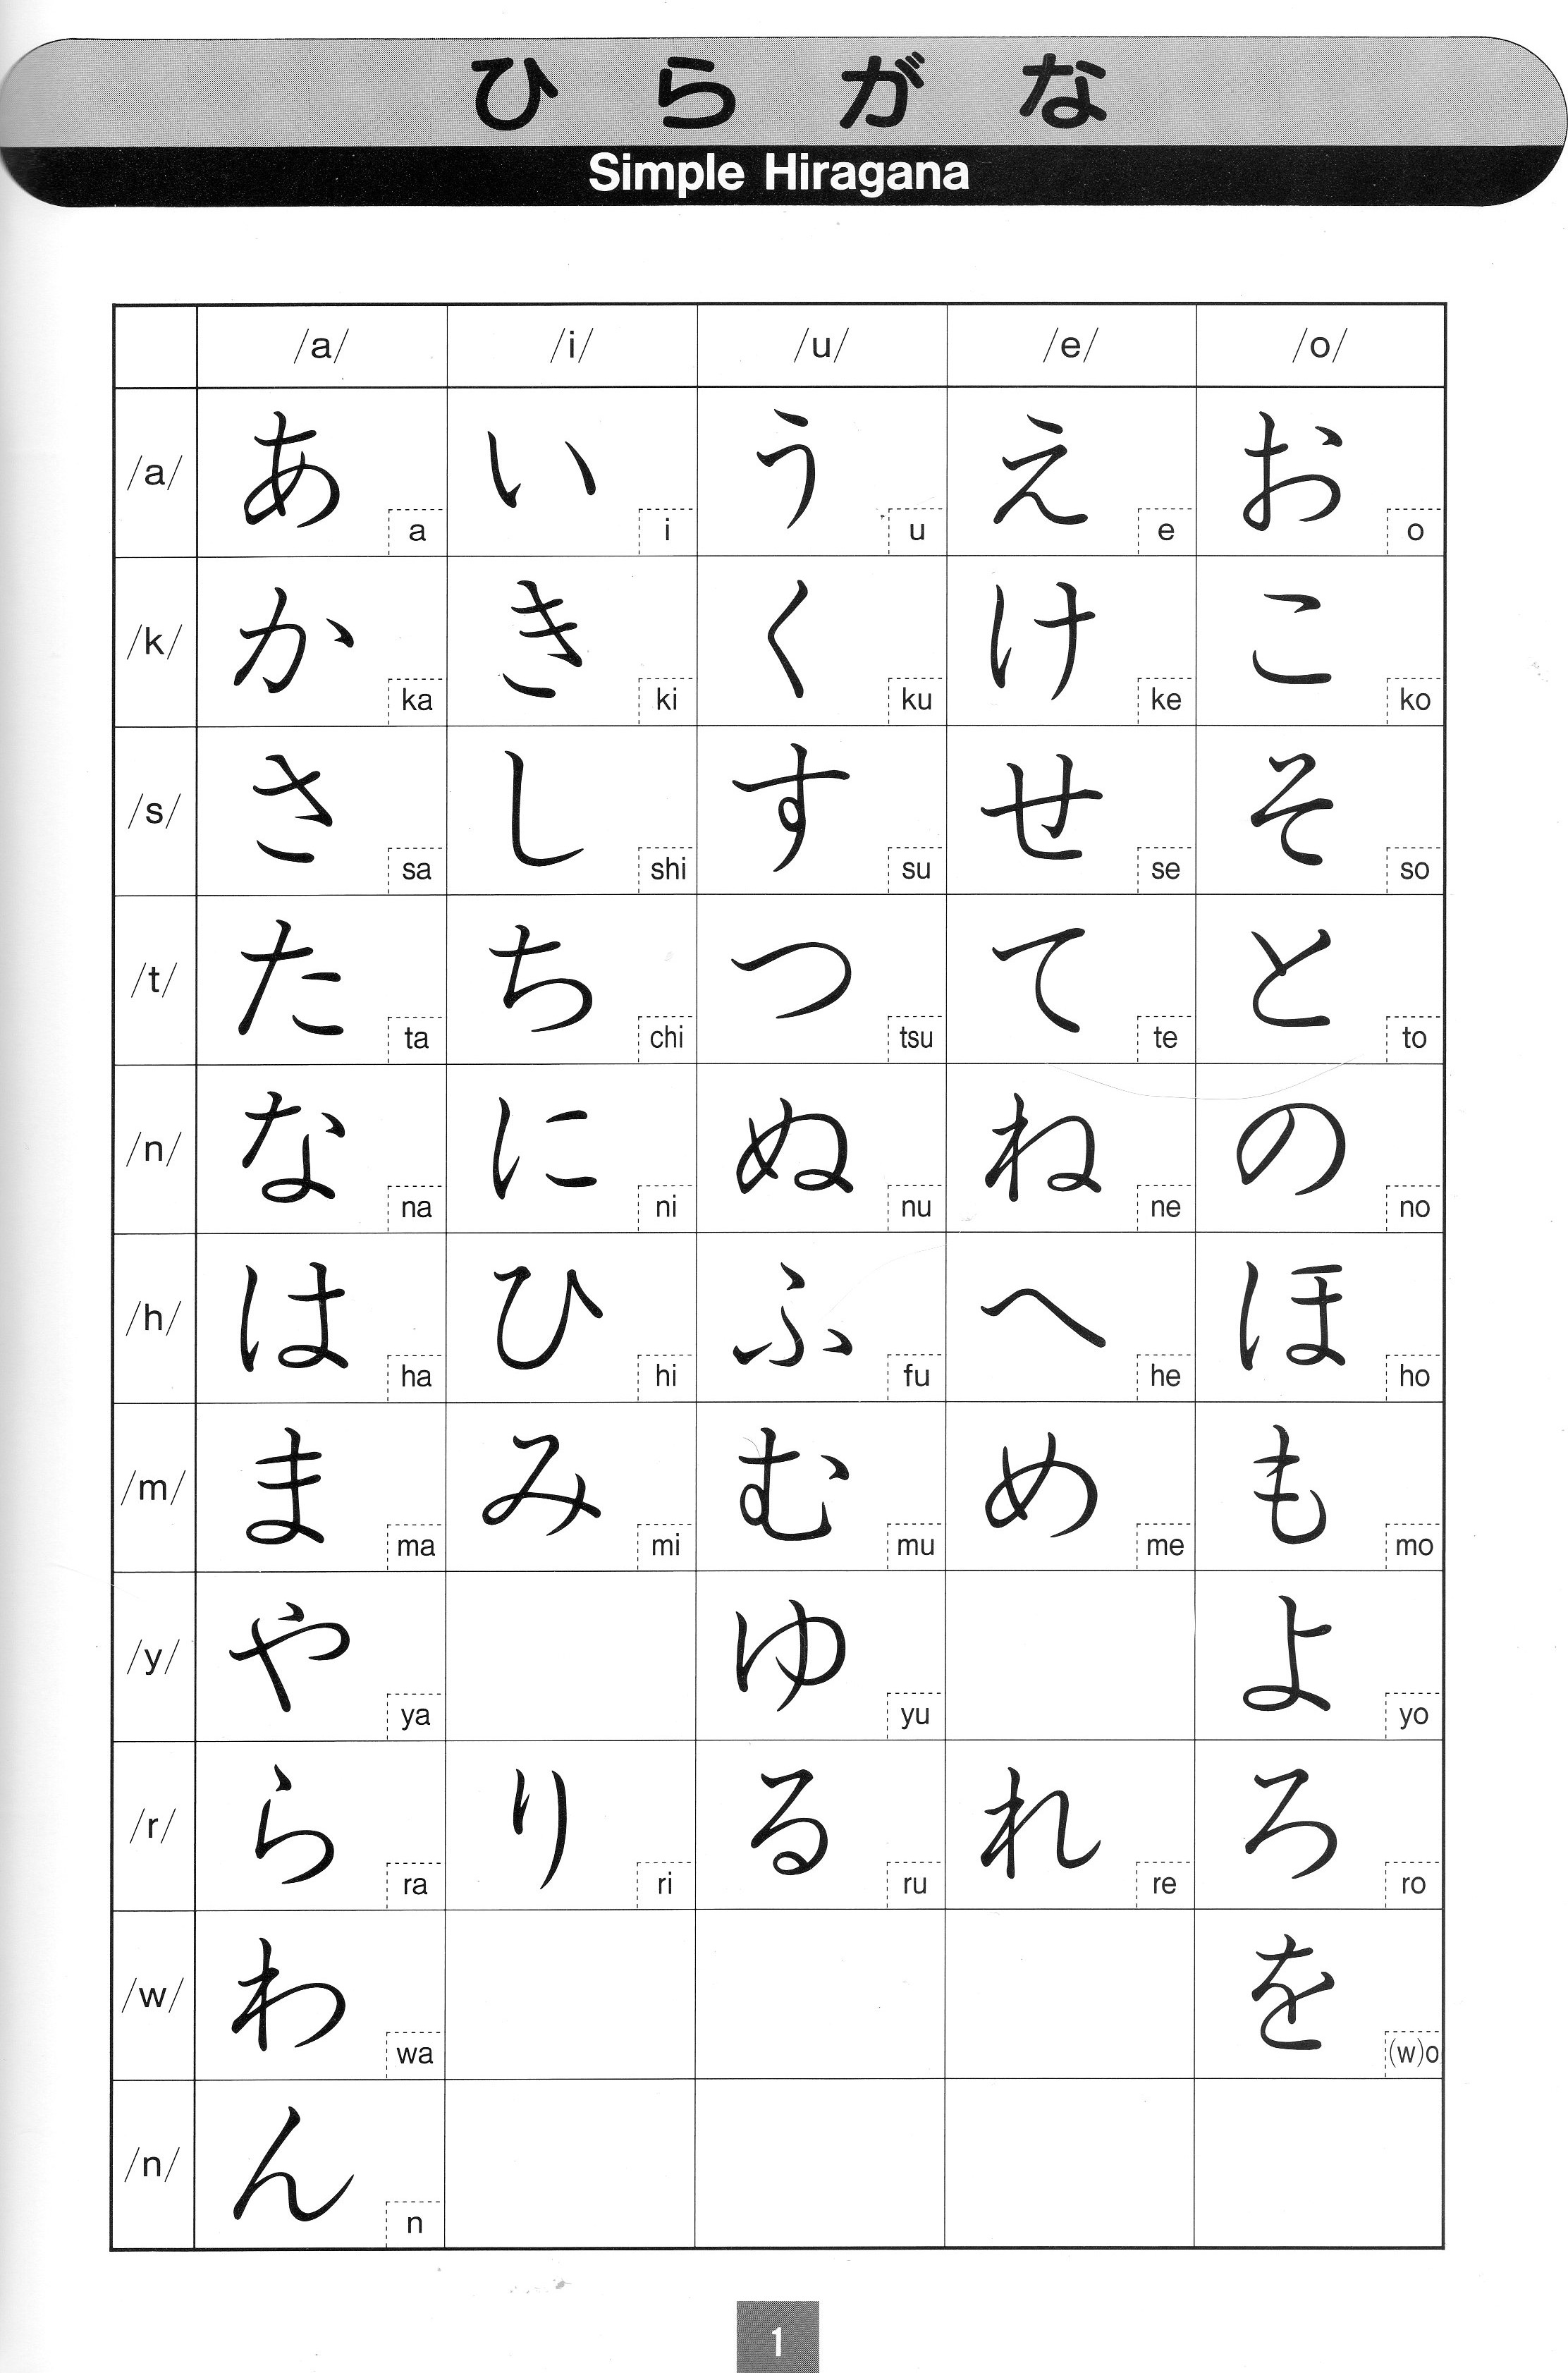 to turn in homework in japanese